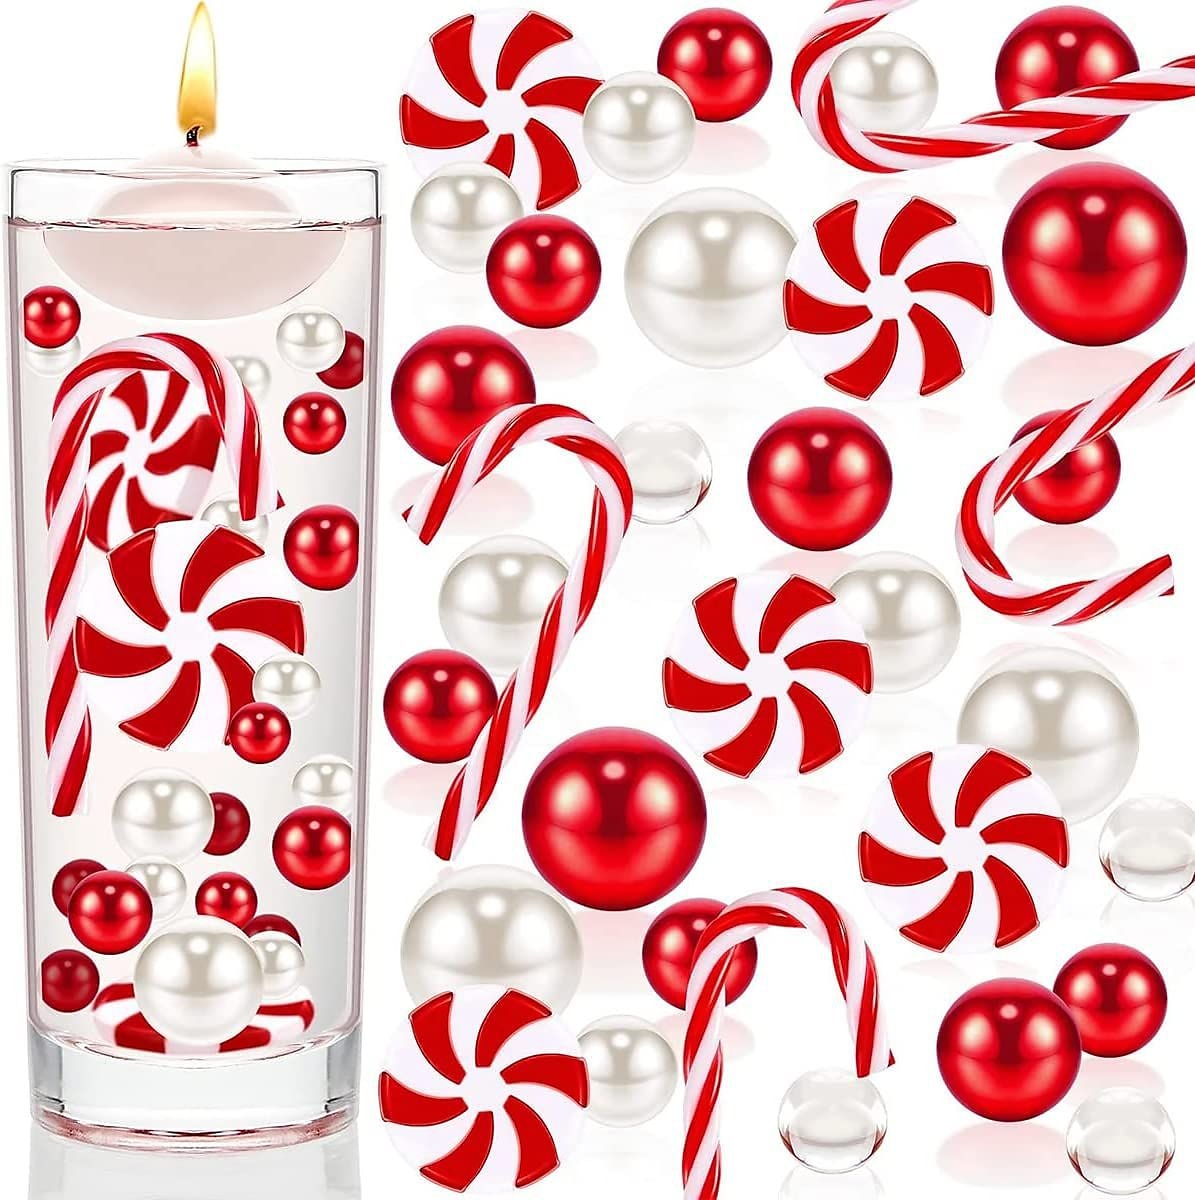  6054Pcs Christmas Vase Filler Floating Pearls for